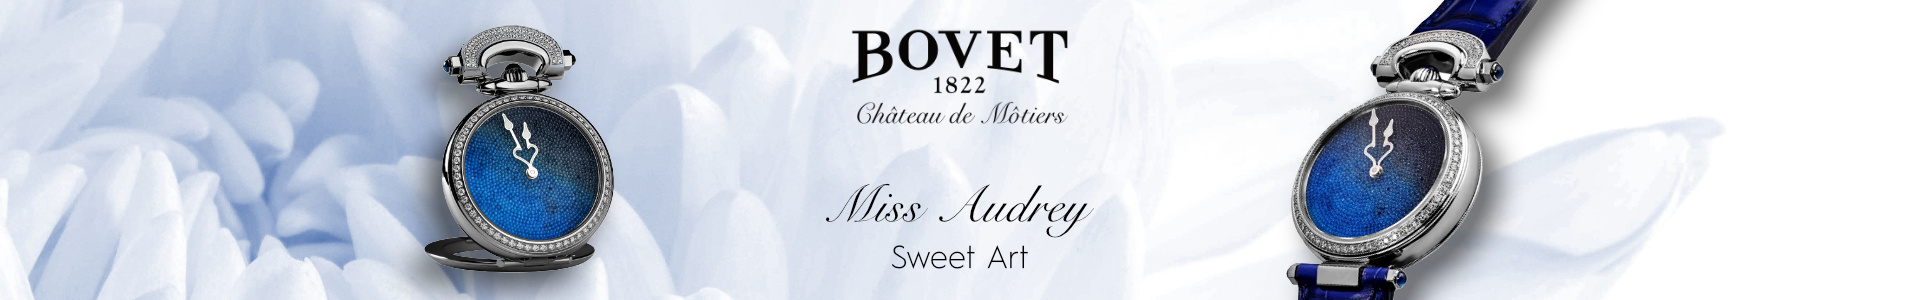 Bovet Miss Audrey Sweet Art